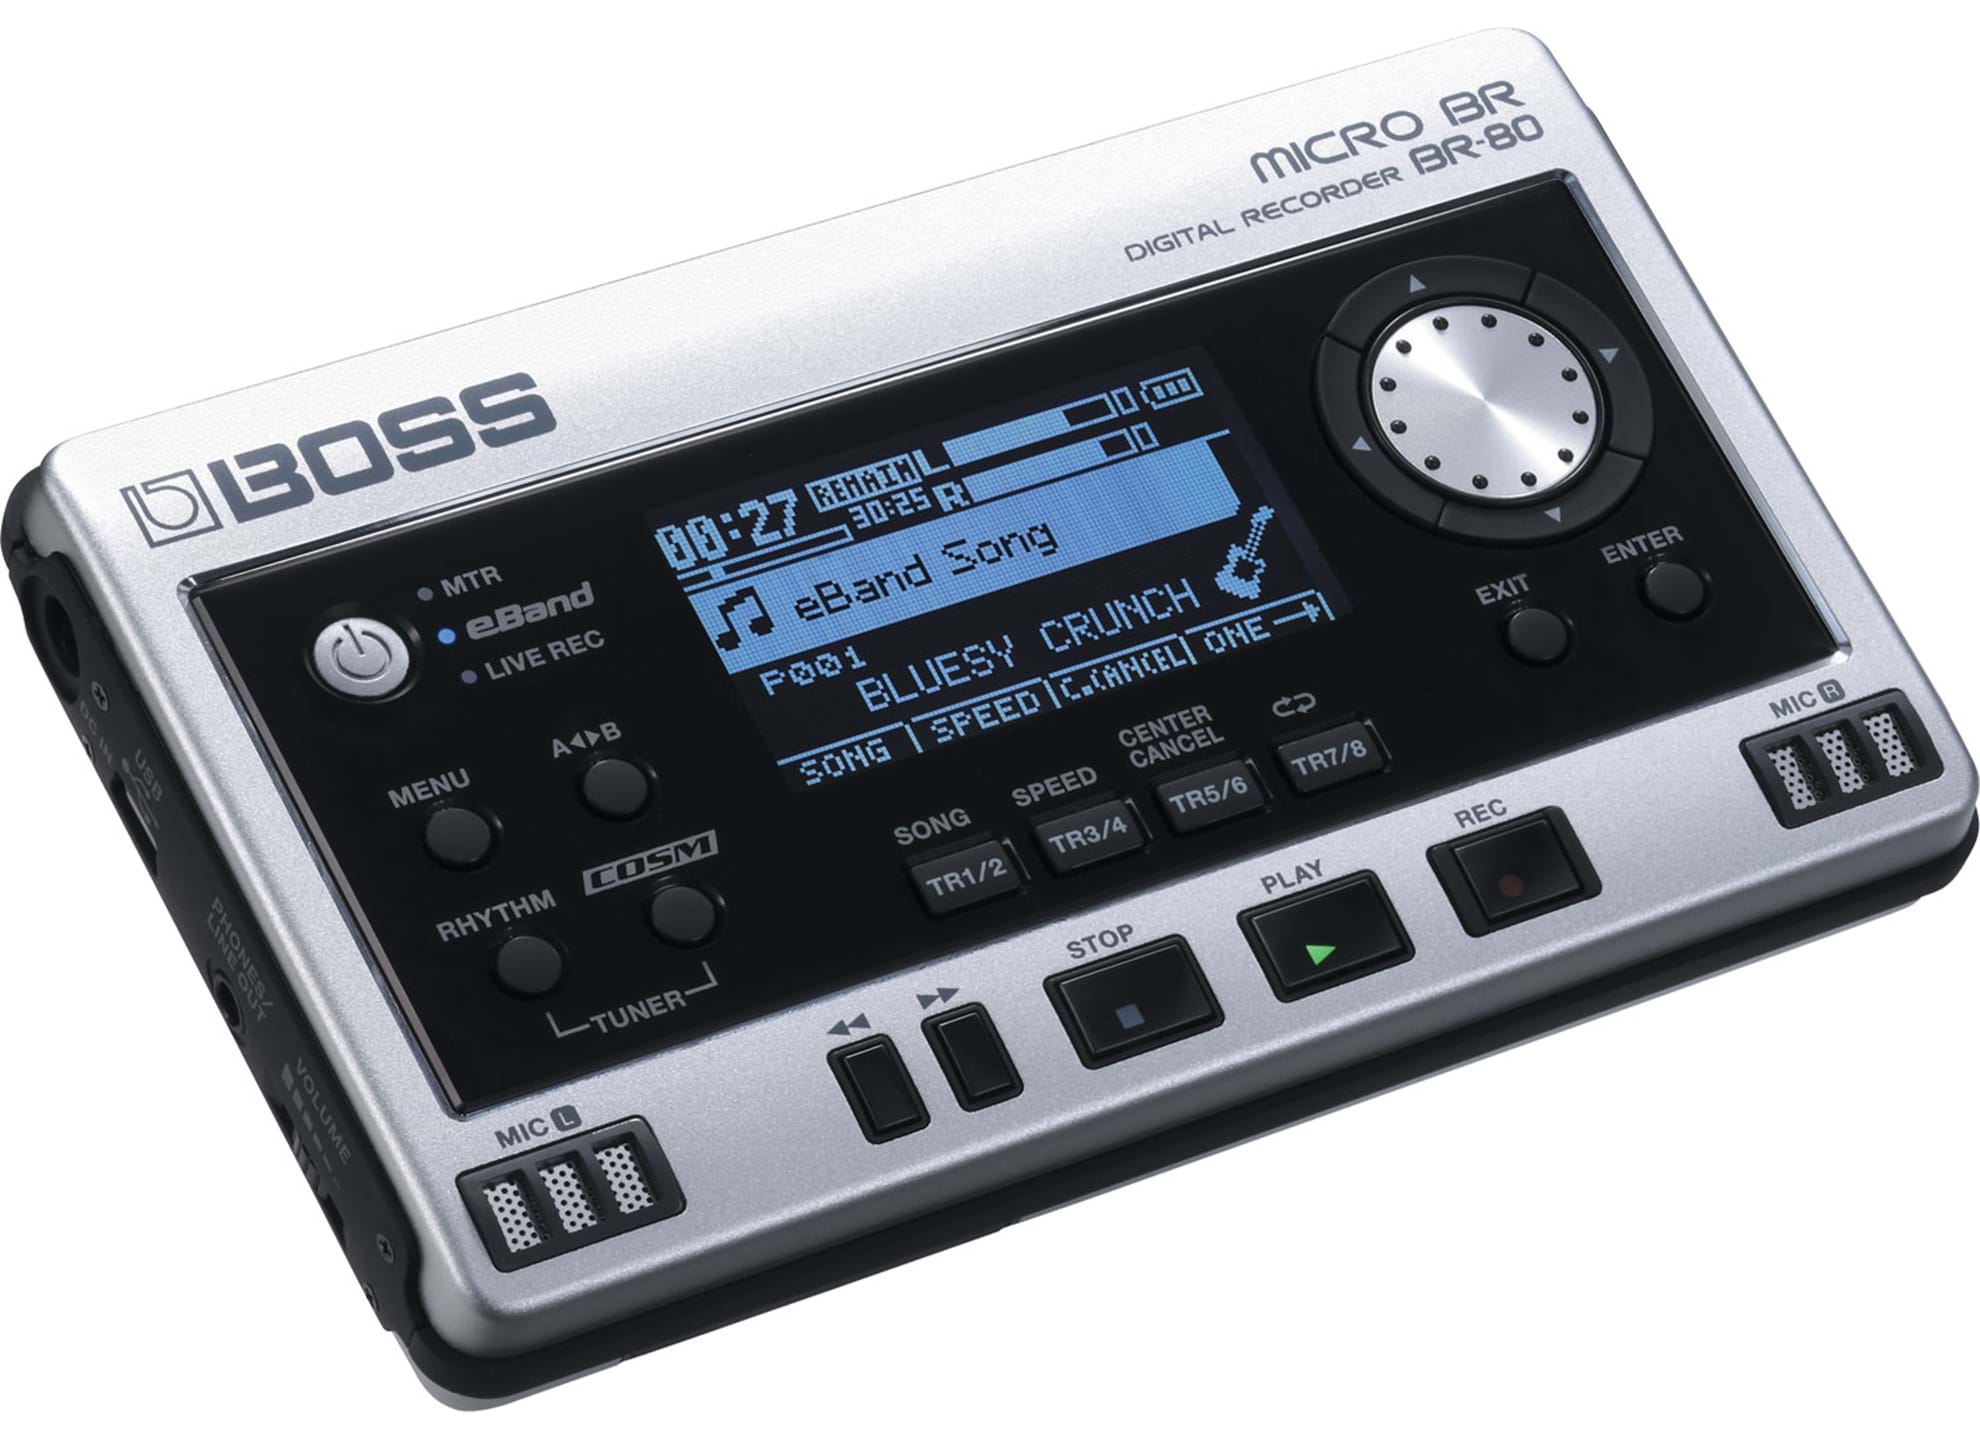 Micro BR-80 Digital Recorder